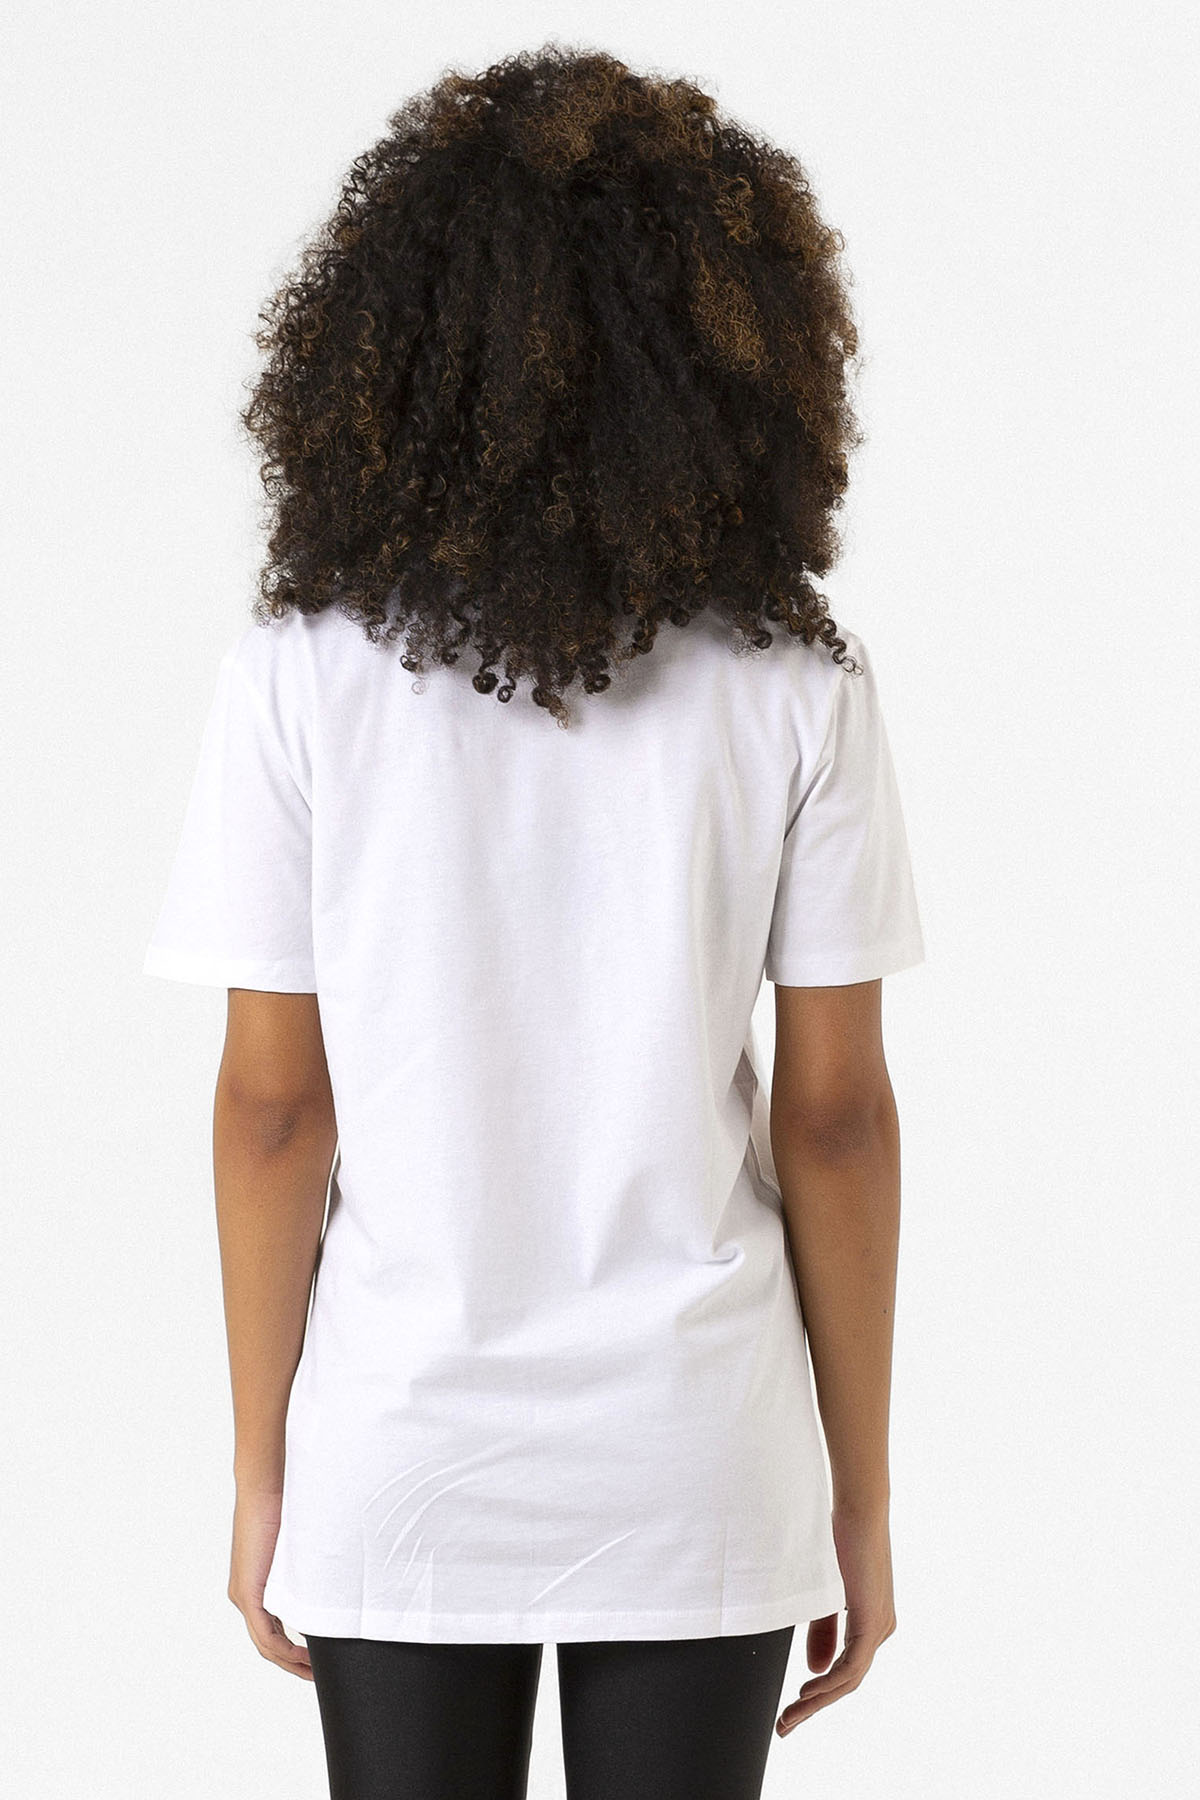 Revel Legacy Tumbleweeds Beyaz Kadın V yaka Tshirt